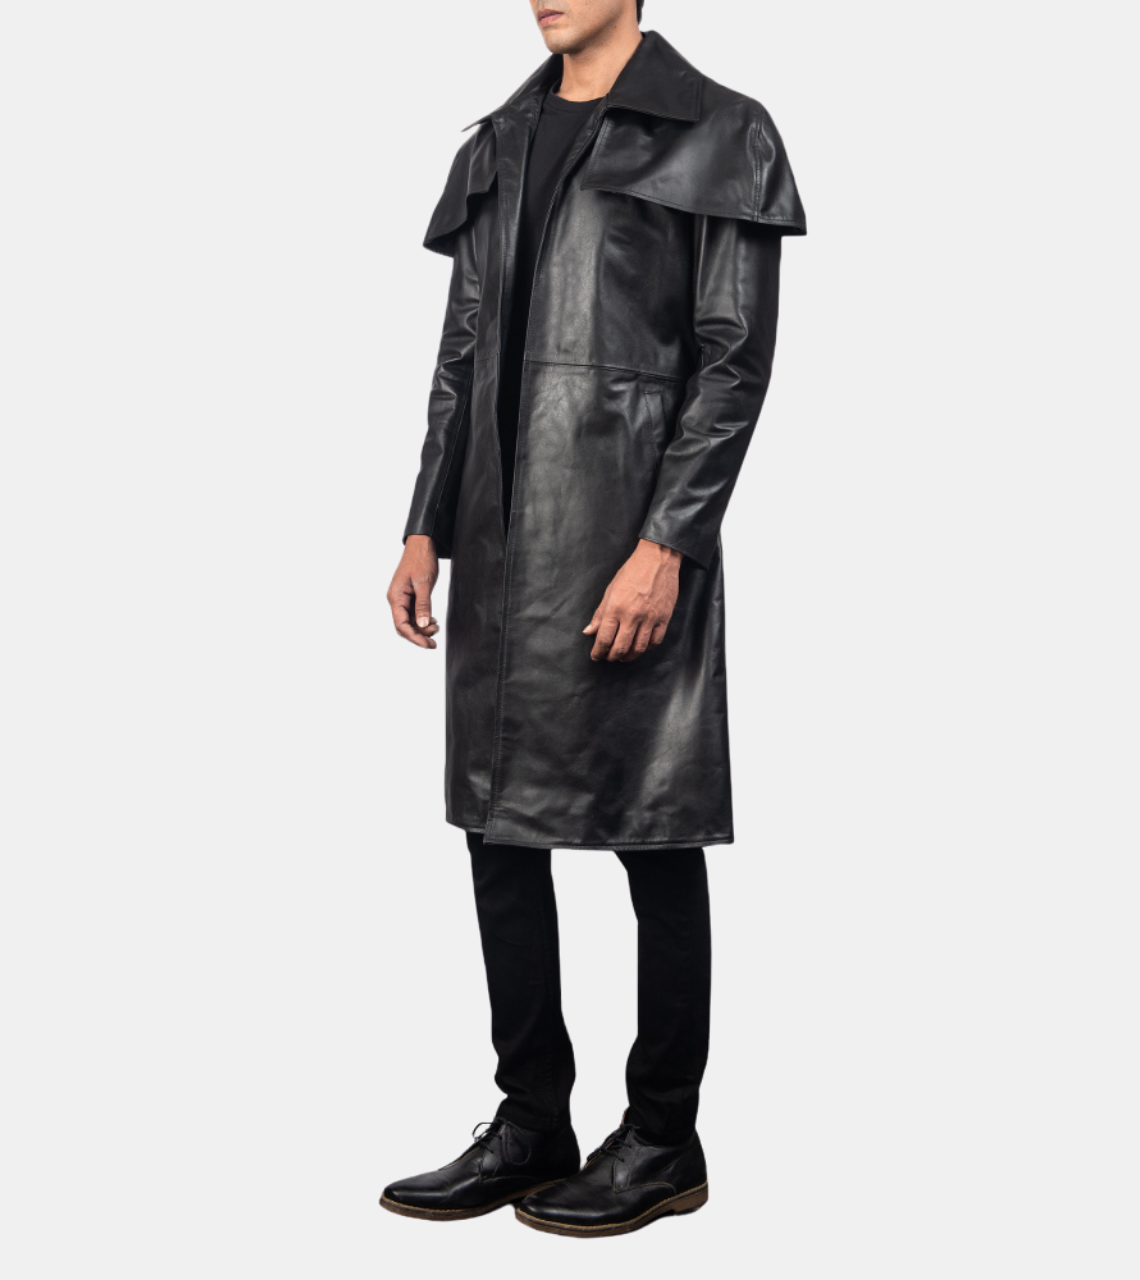  Men's Black Leather Coat